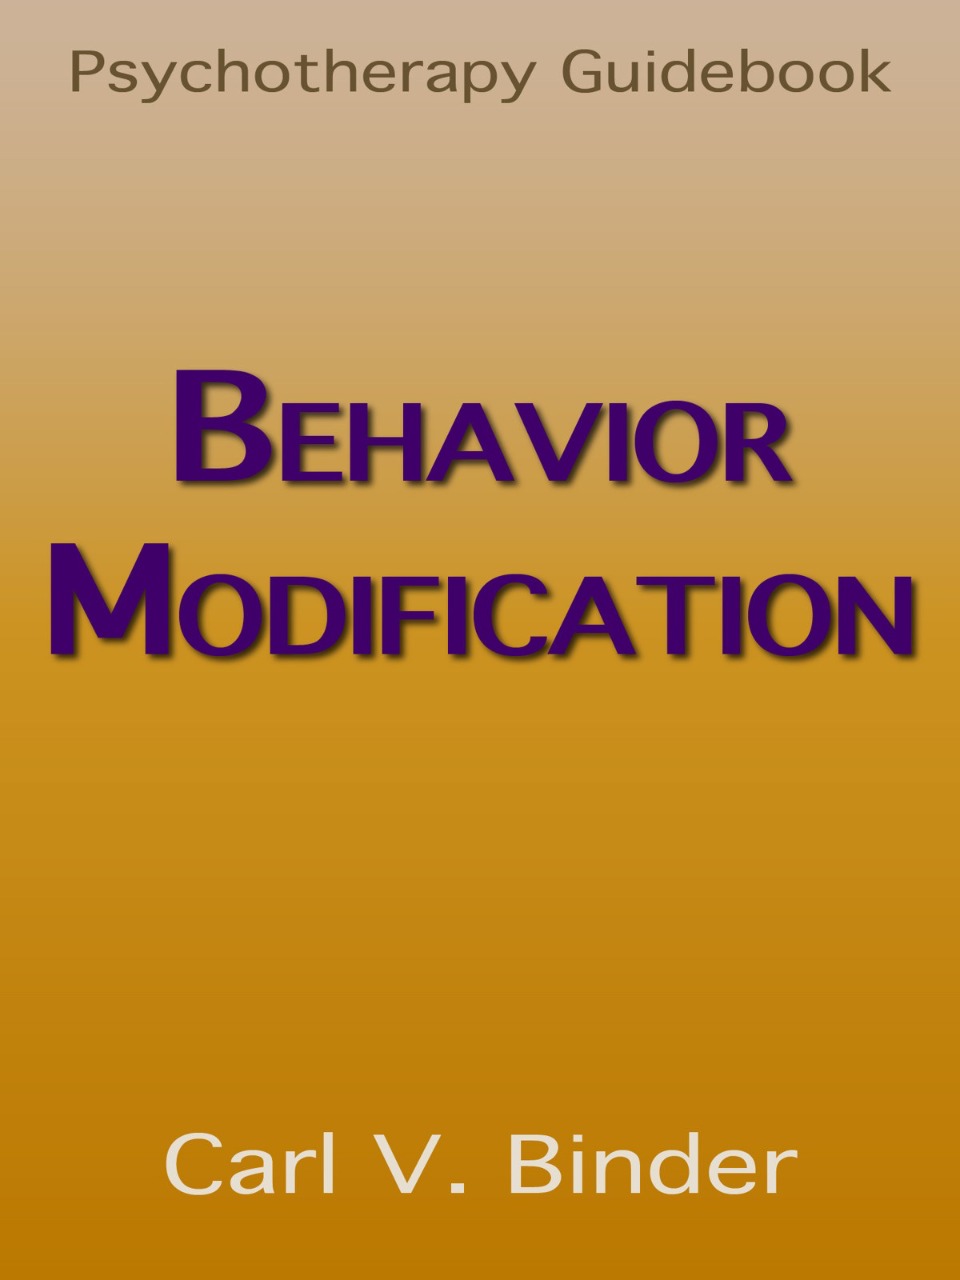 Behavior Modification pdf free download - BooksFree